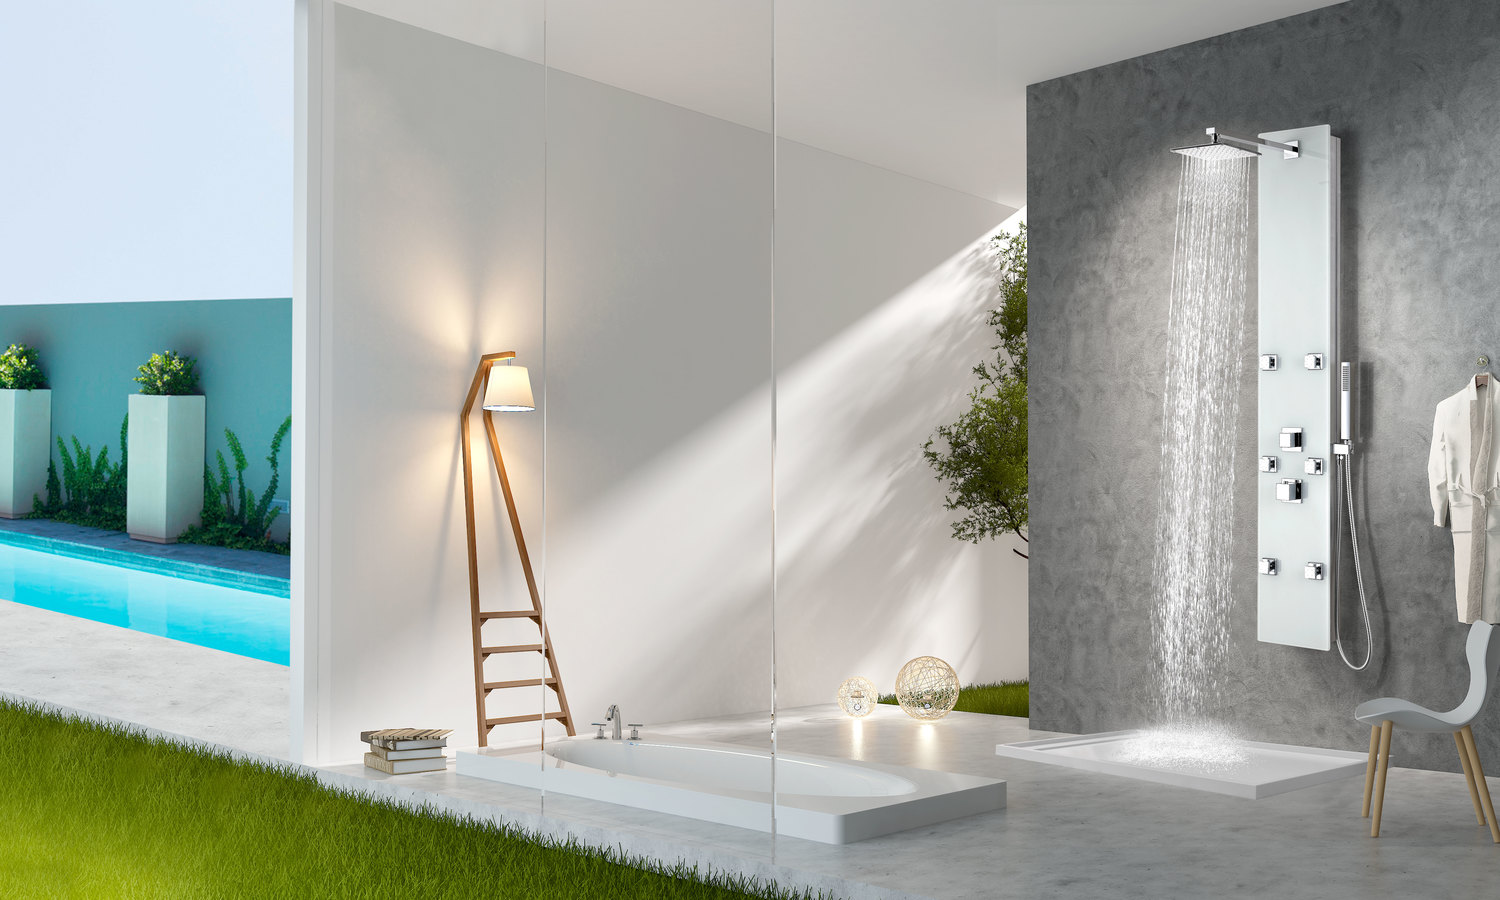 shower panel system   Anzzi SHOWER - Shower Panels White